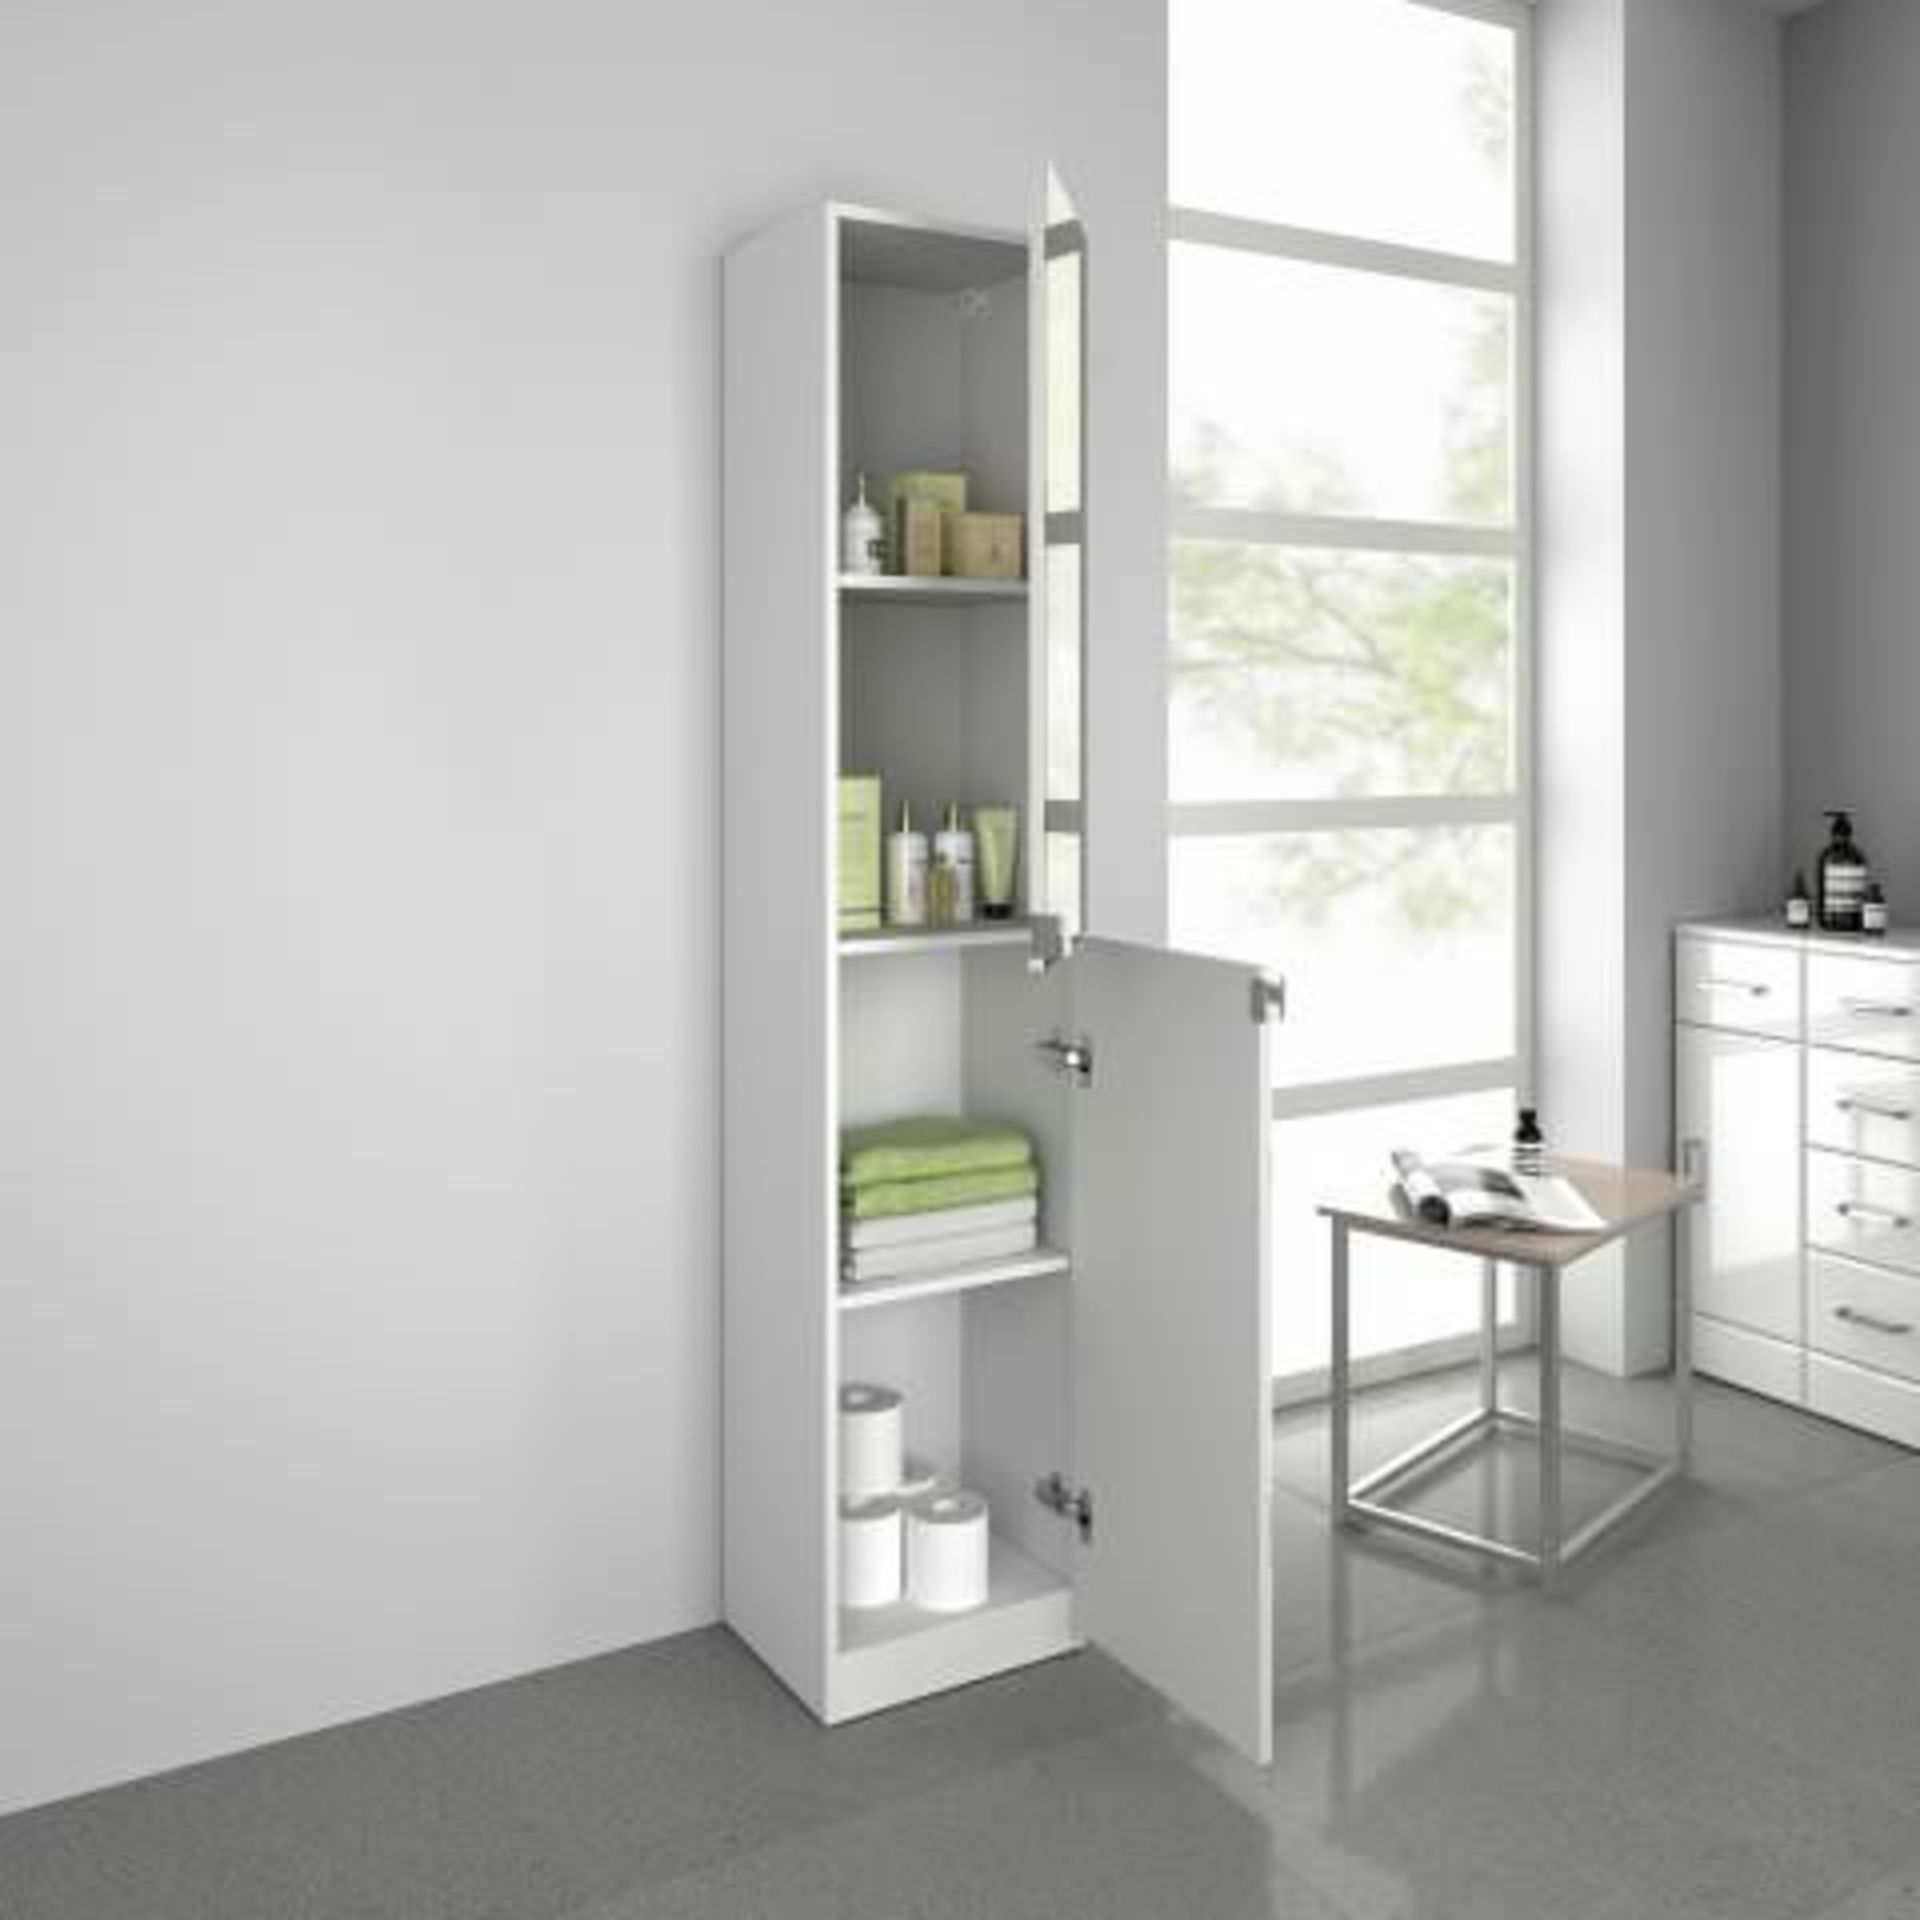 (K27) 1700x350mm Mirrored Door Matte White Tall Storage Cabinet - Floor Standing. RRP £339.99. - Image 5 of 5